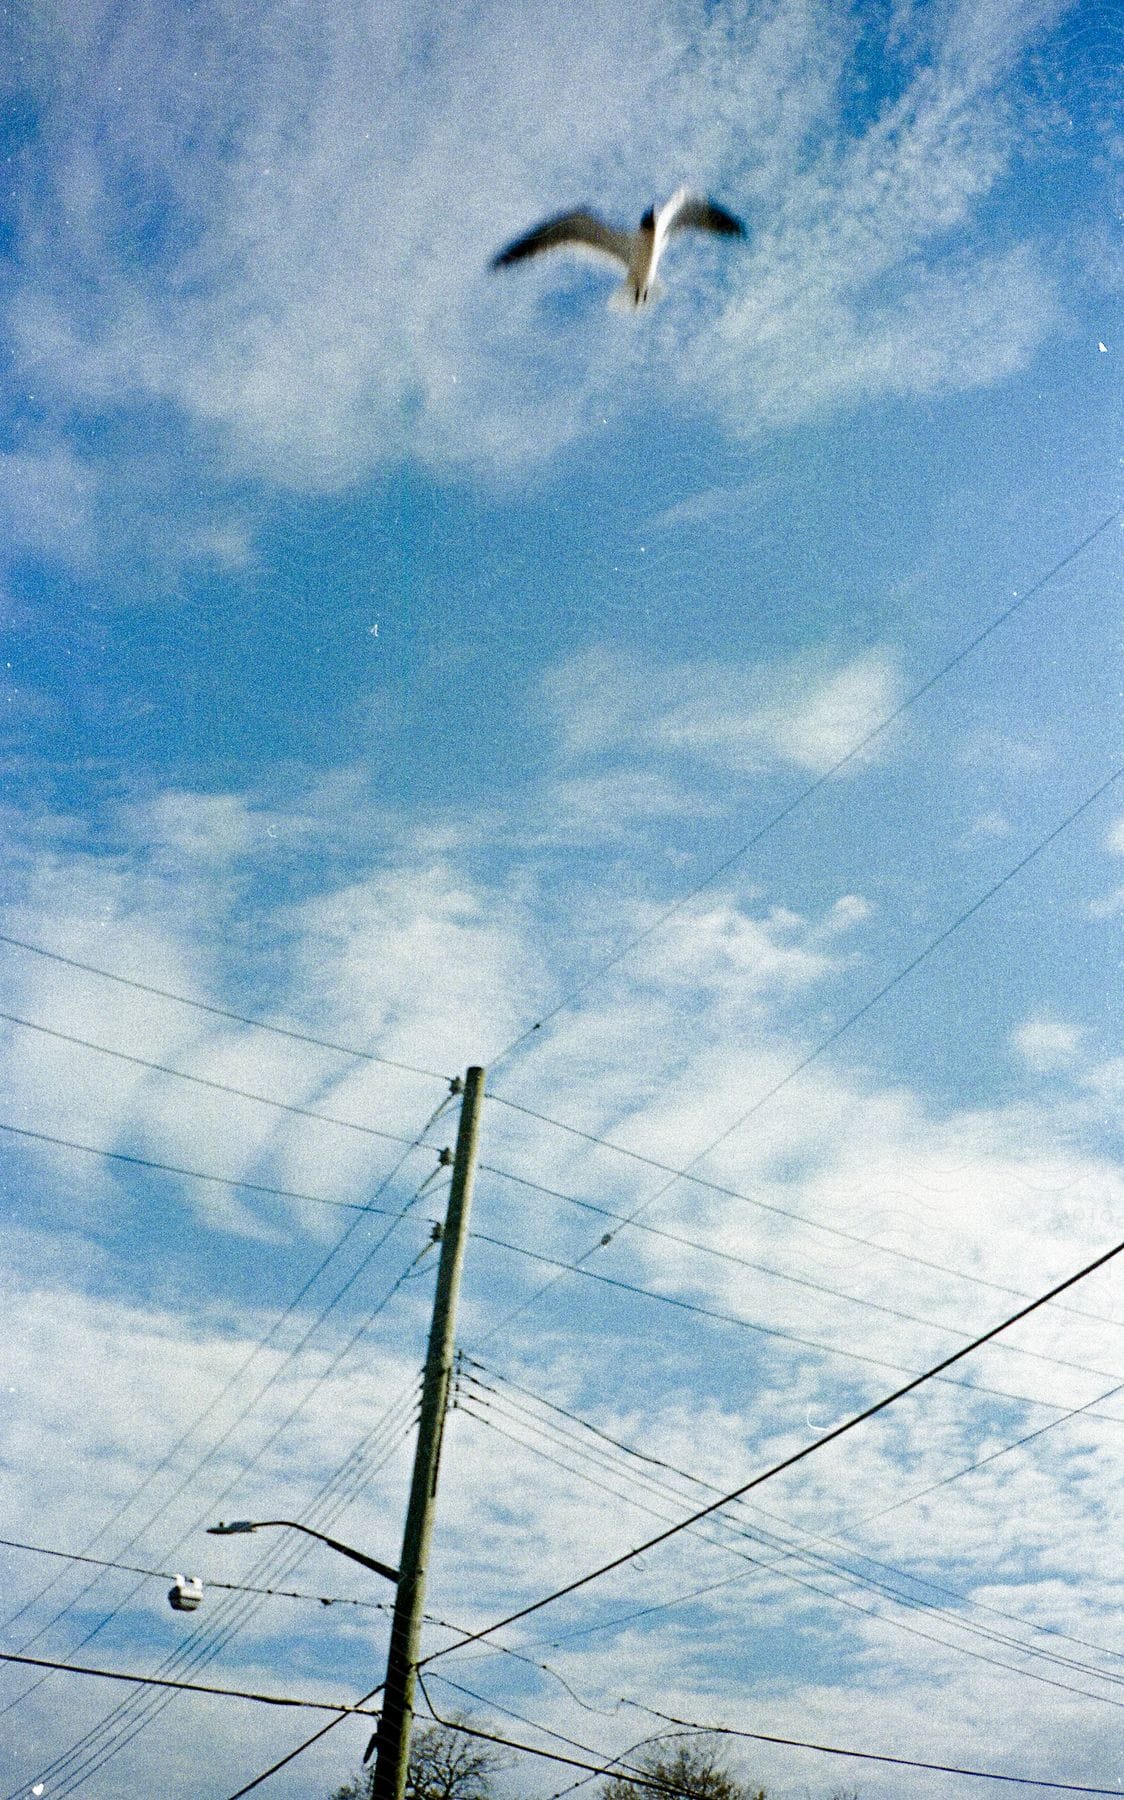 A bird flies in the blue sky above power lines